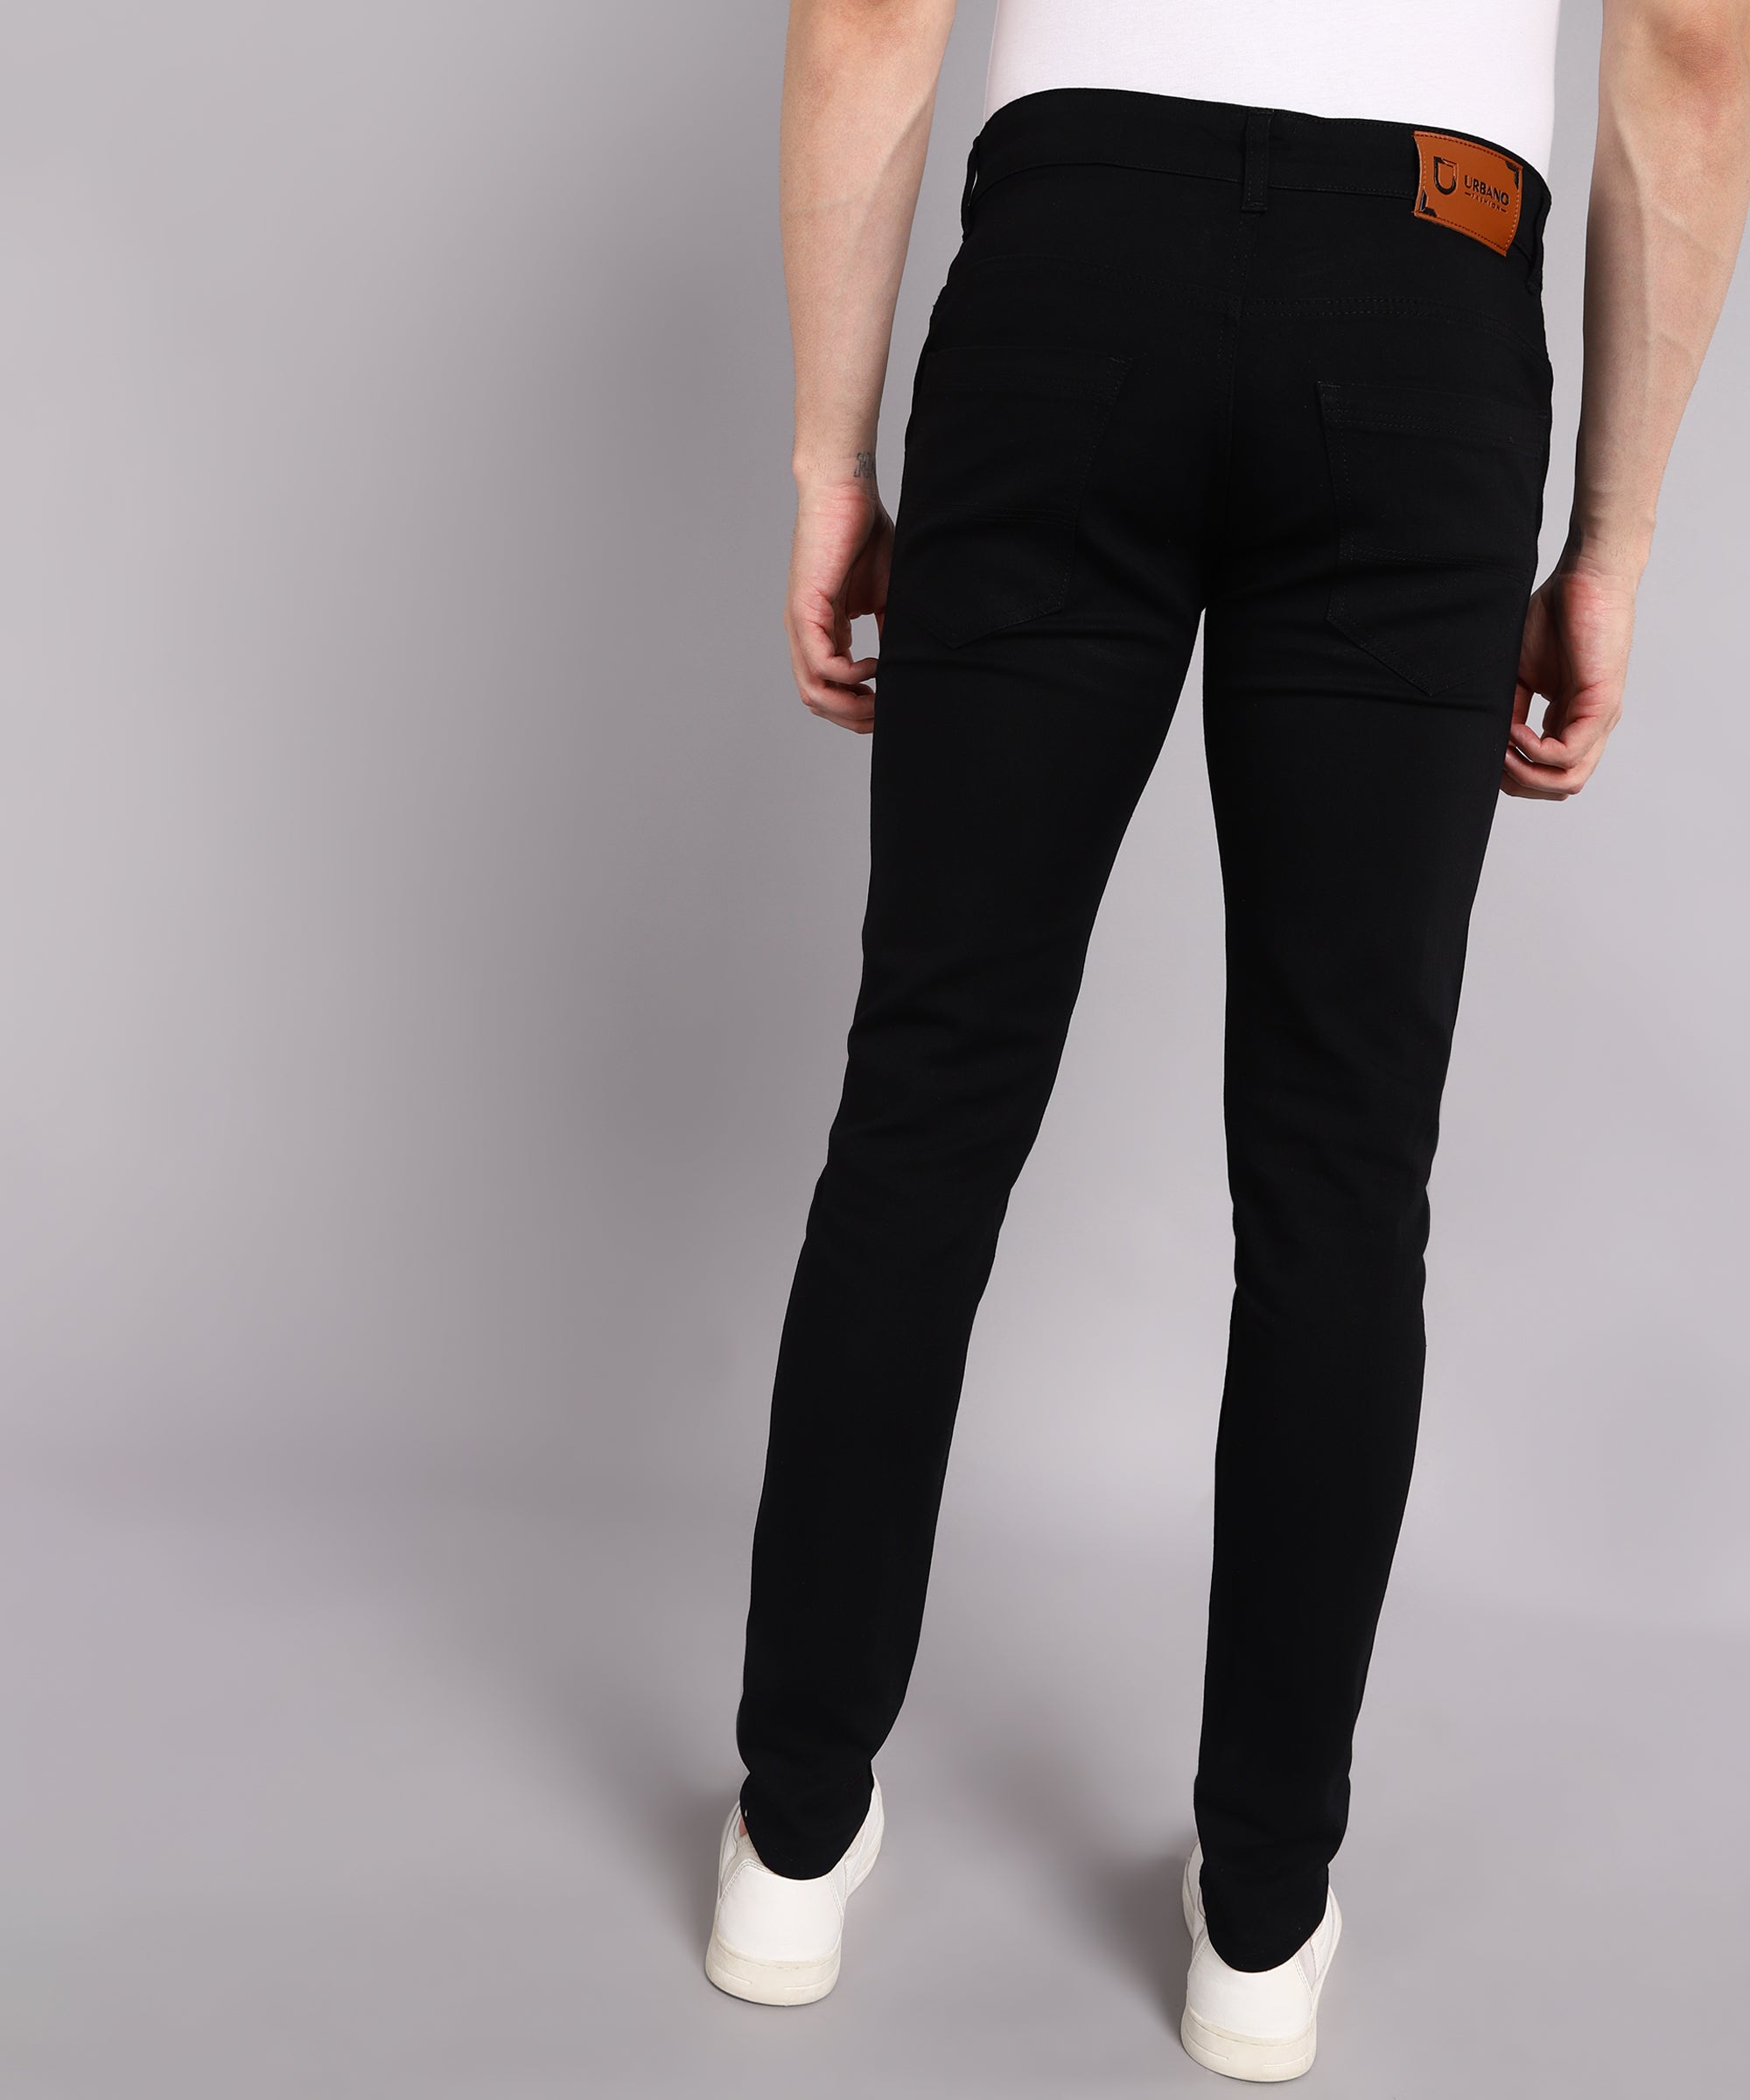 Men's Black Slim Fit Denim Jeans Stretchable